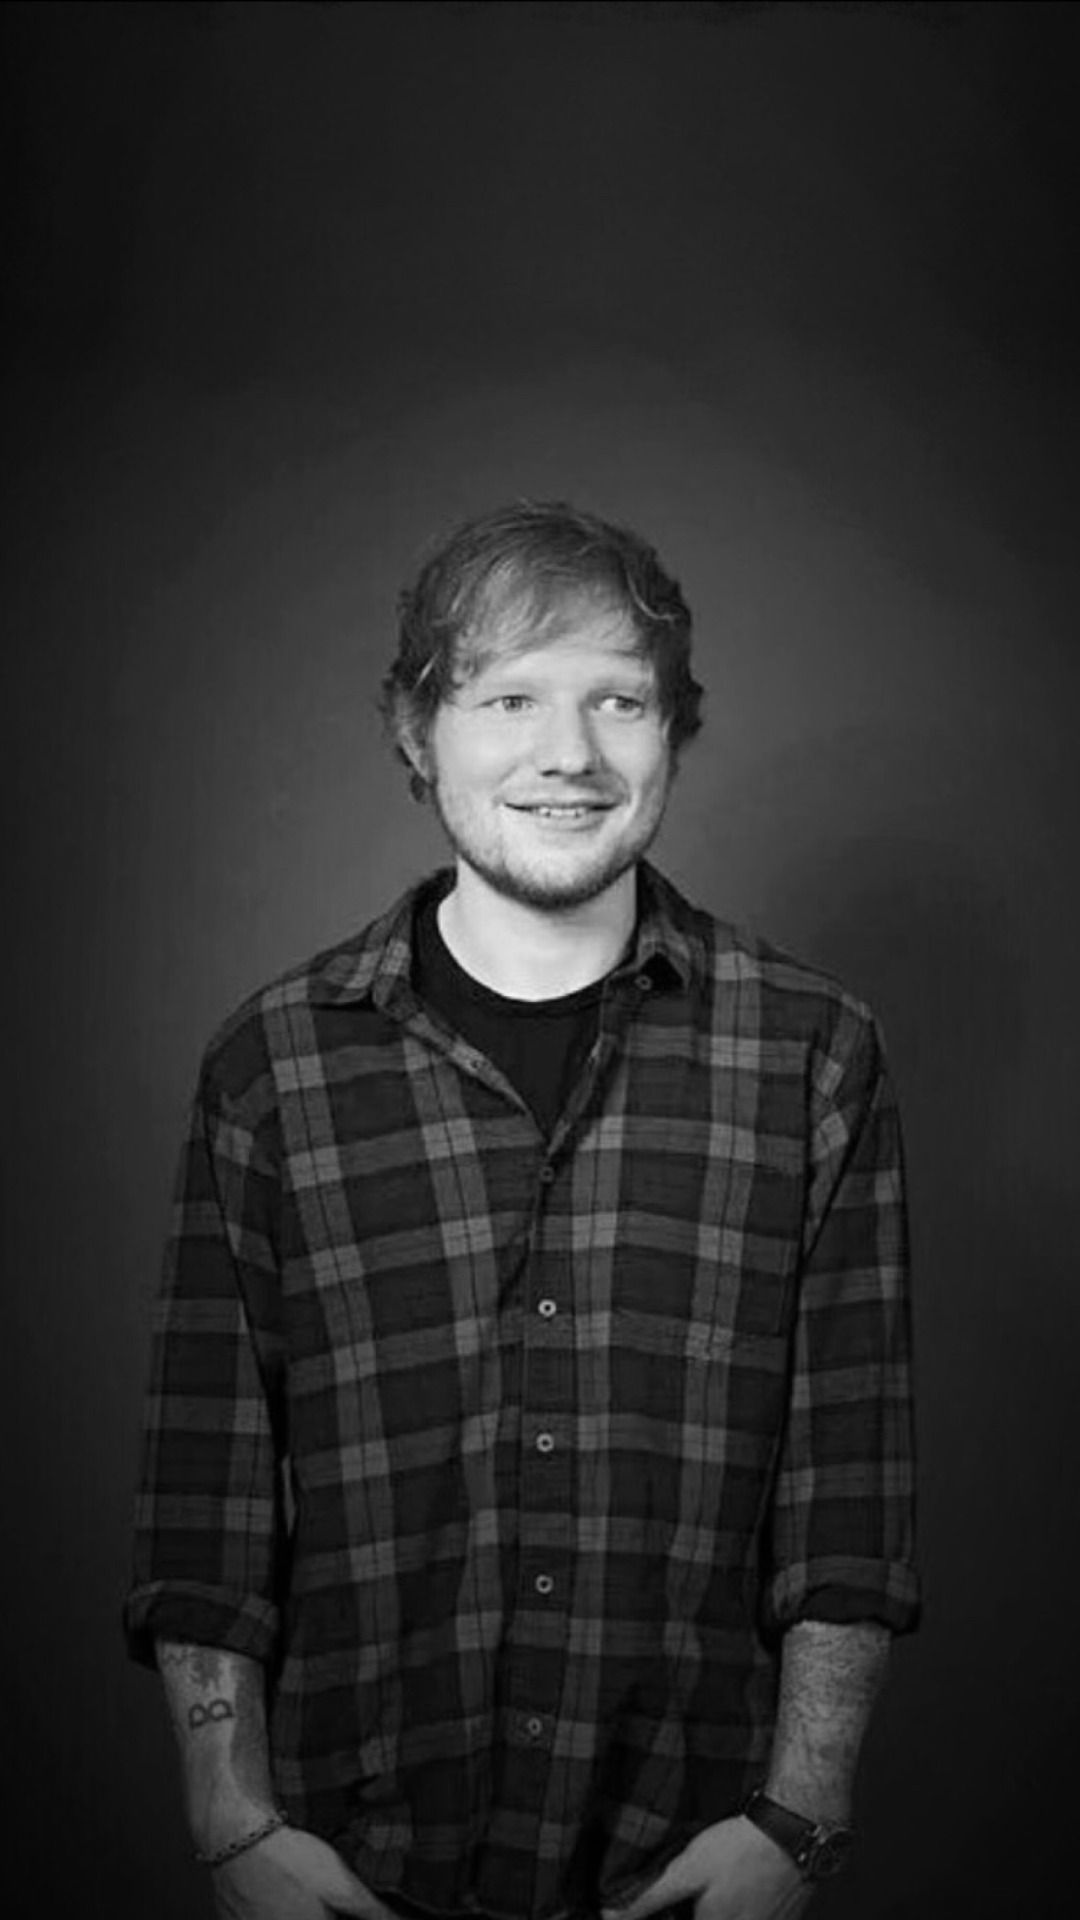 Ed Sheeran Wallpapers — Ed Sheeran wallpaper/lock screen. Sized for...